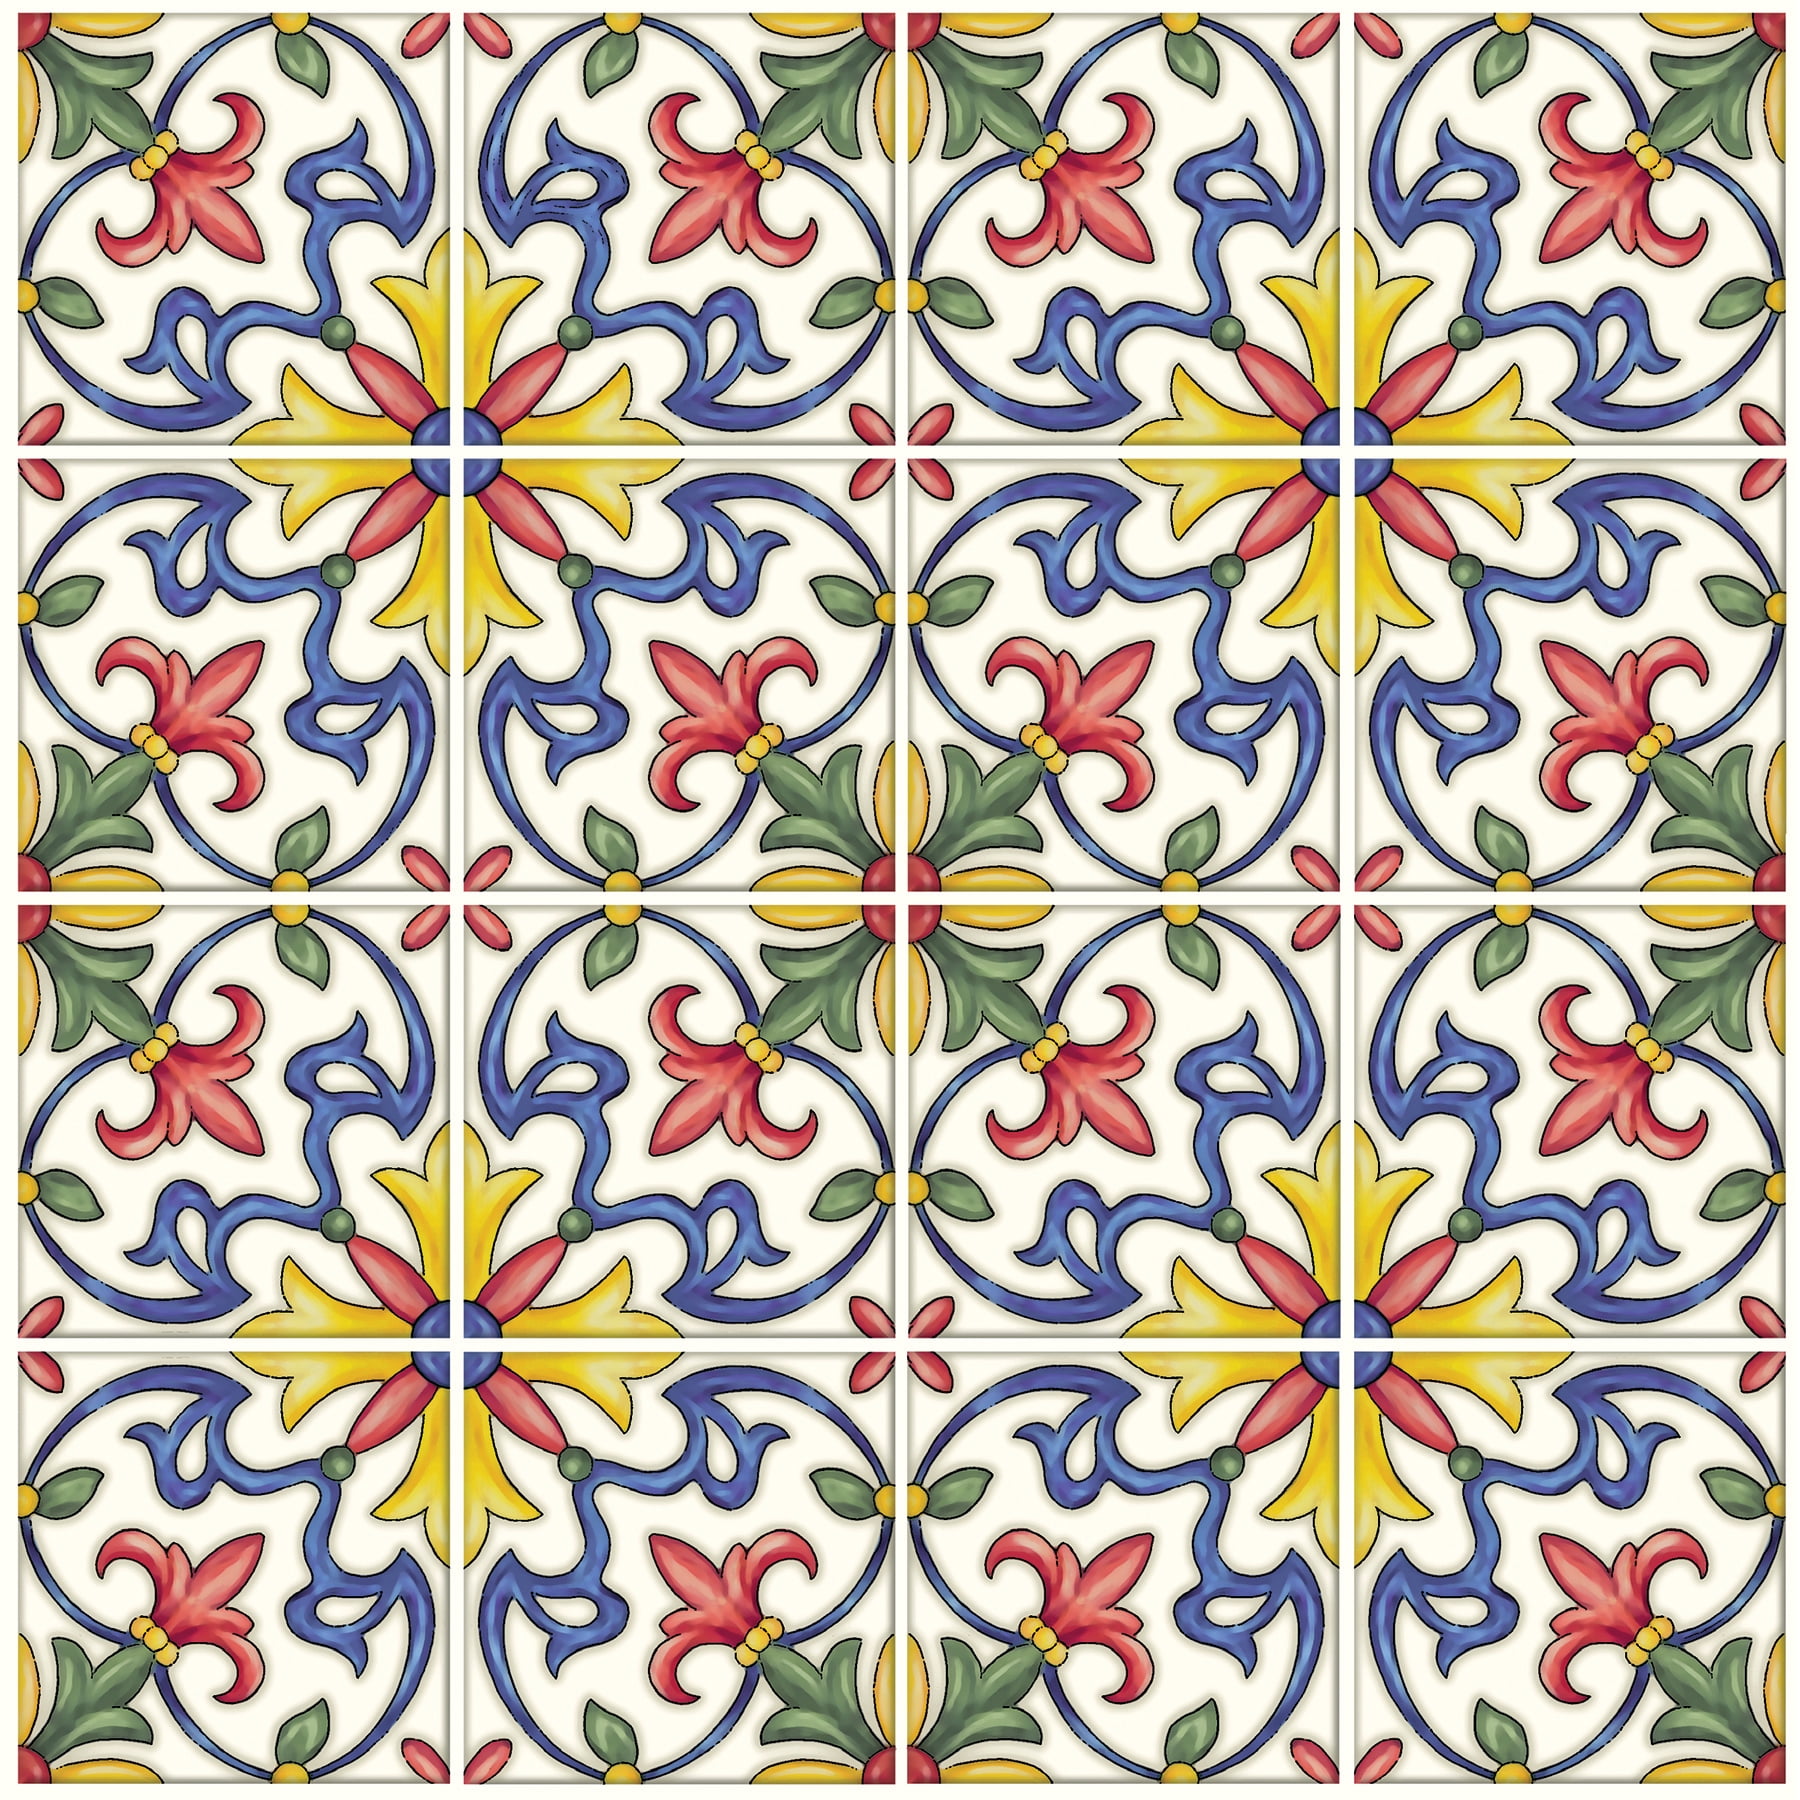 Nh2365 Tuscan Tile Peel & Stick Backsplash Tiles - Multicolor